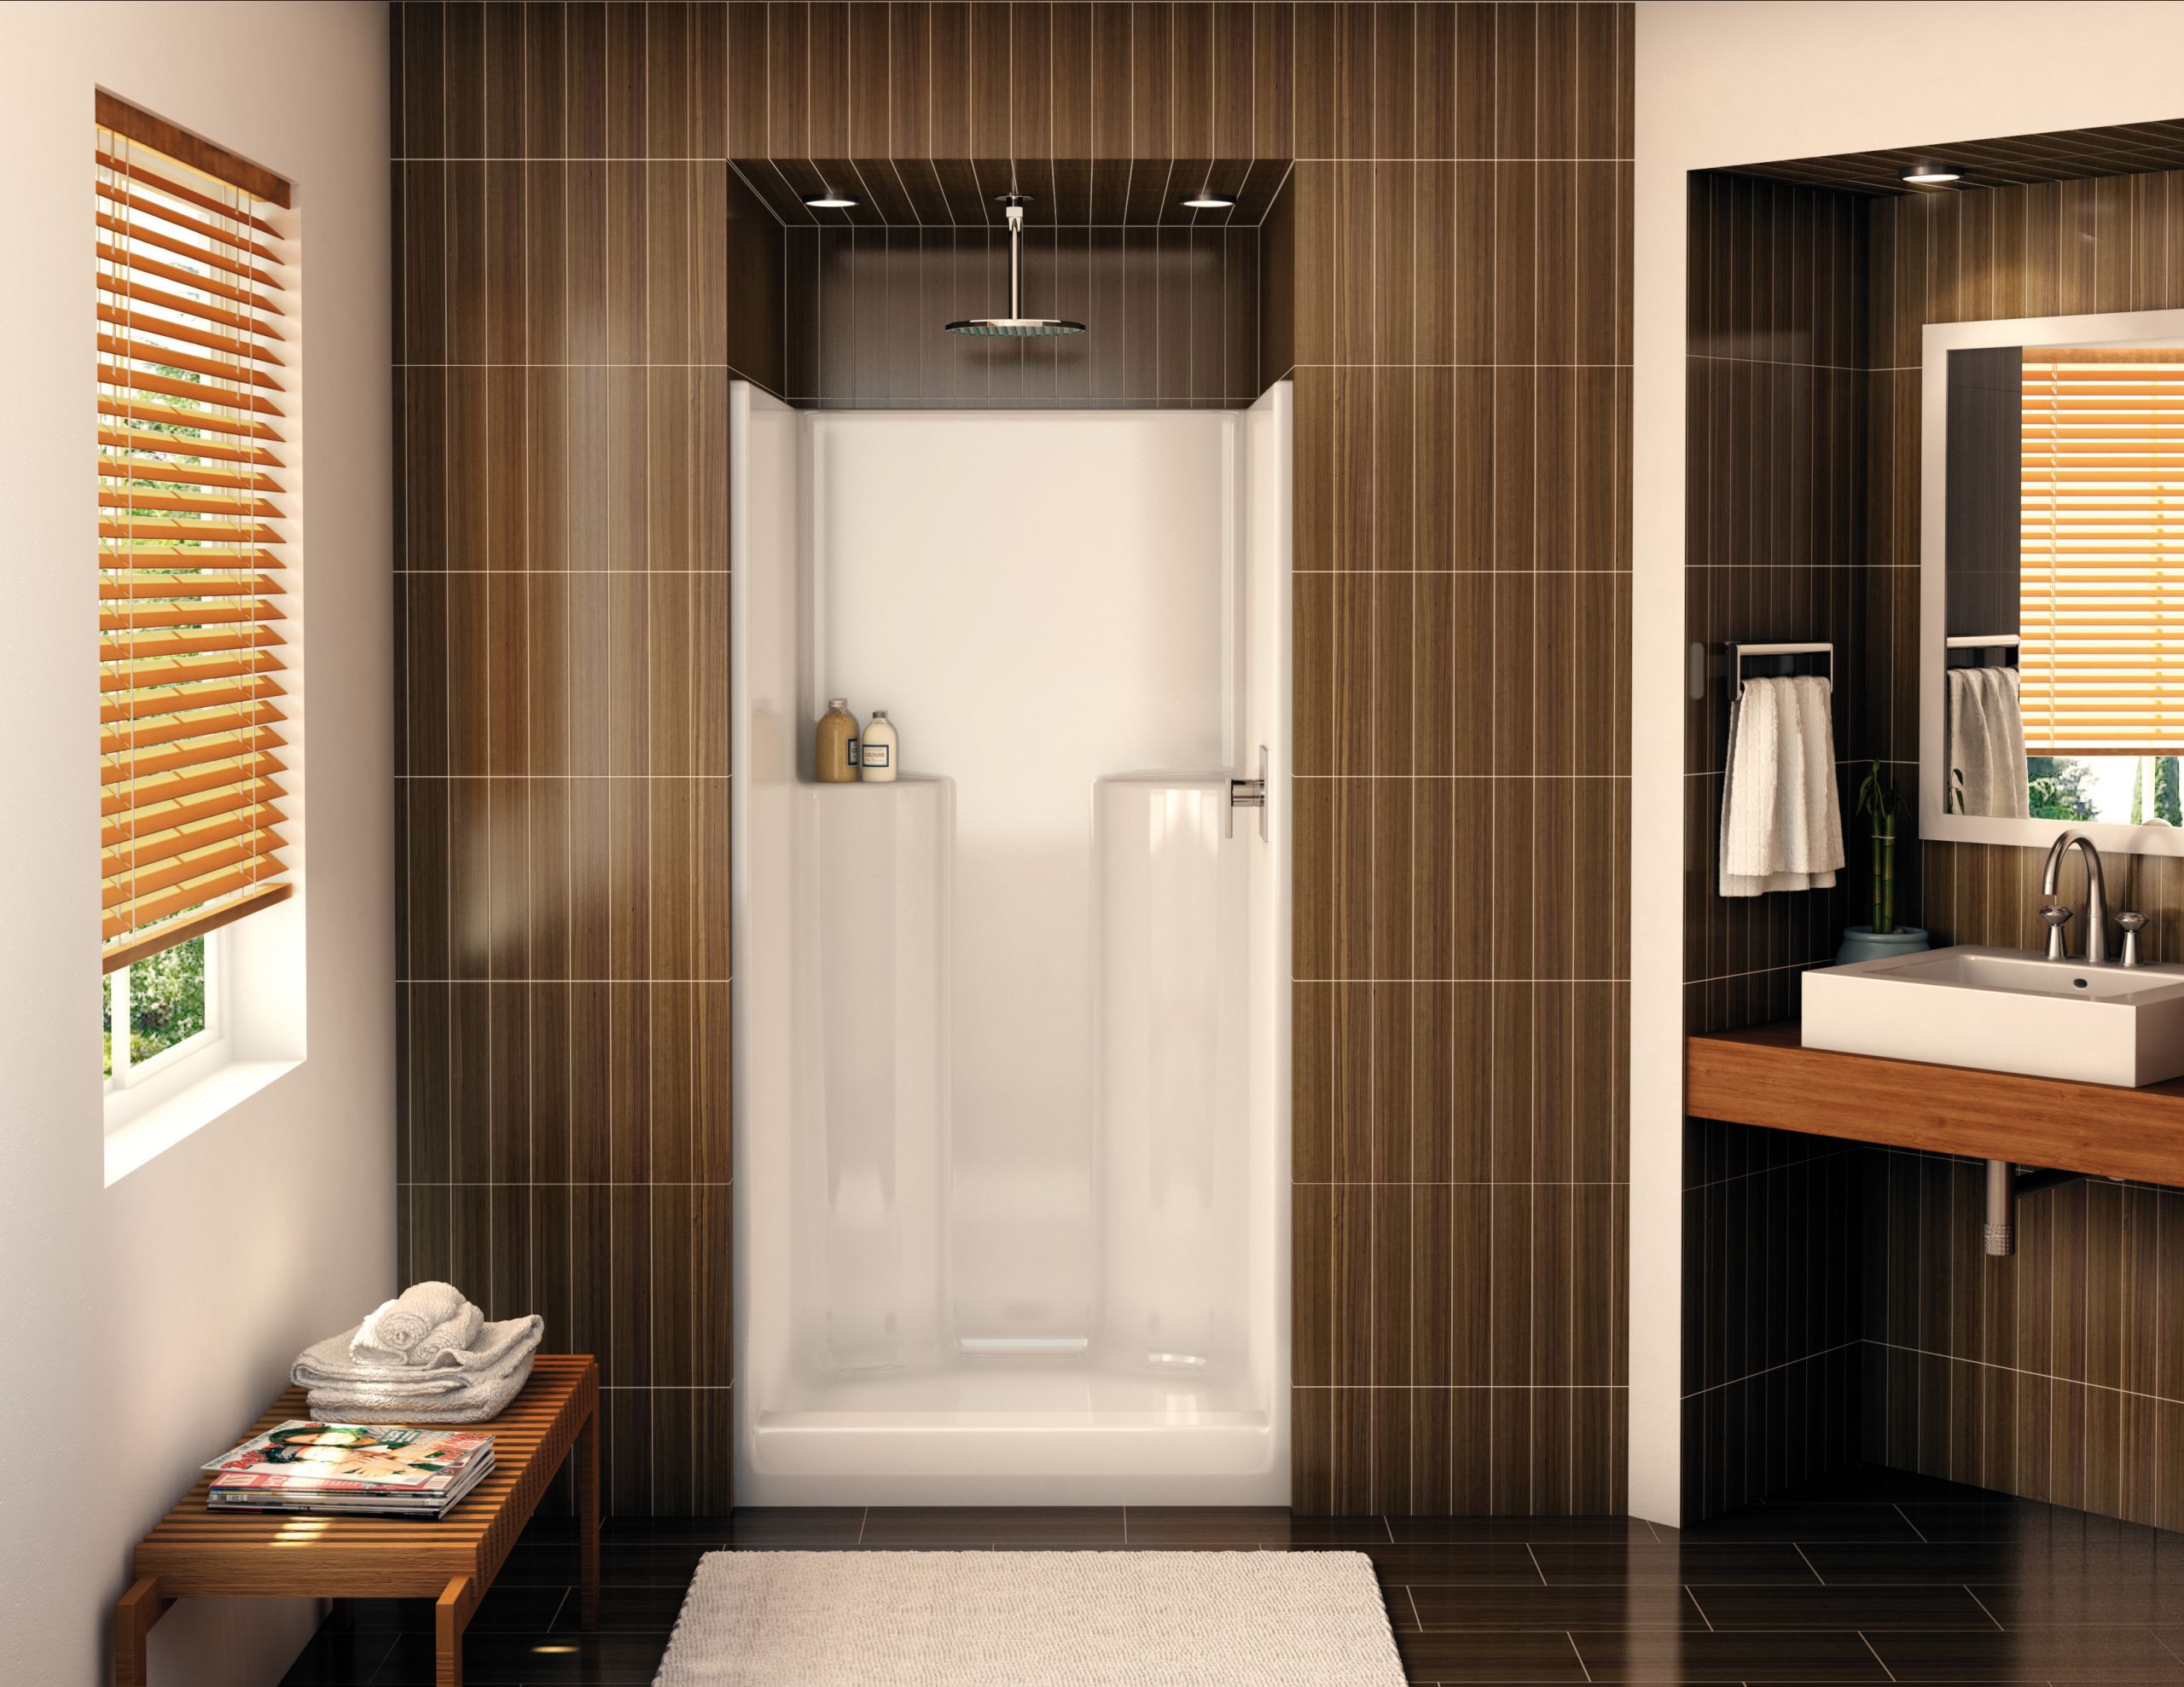 Home Depot Bathroom Shower Stalls
 Bathroom Design Fantastic Home Depot Shower Stalls For